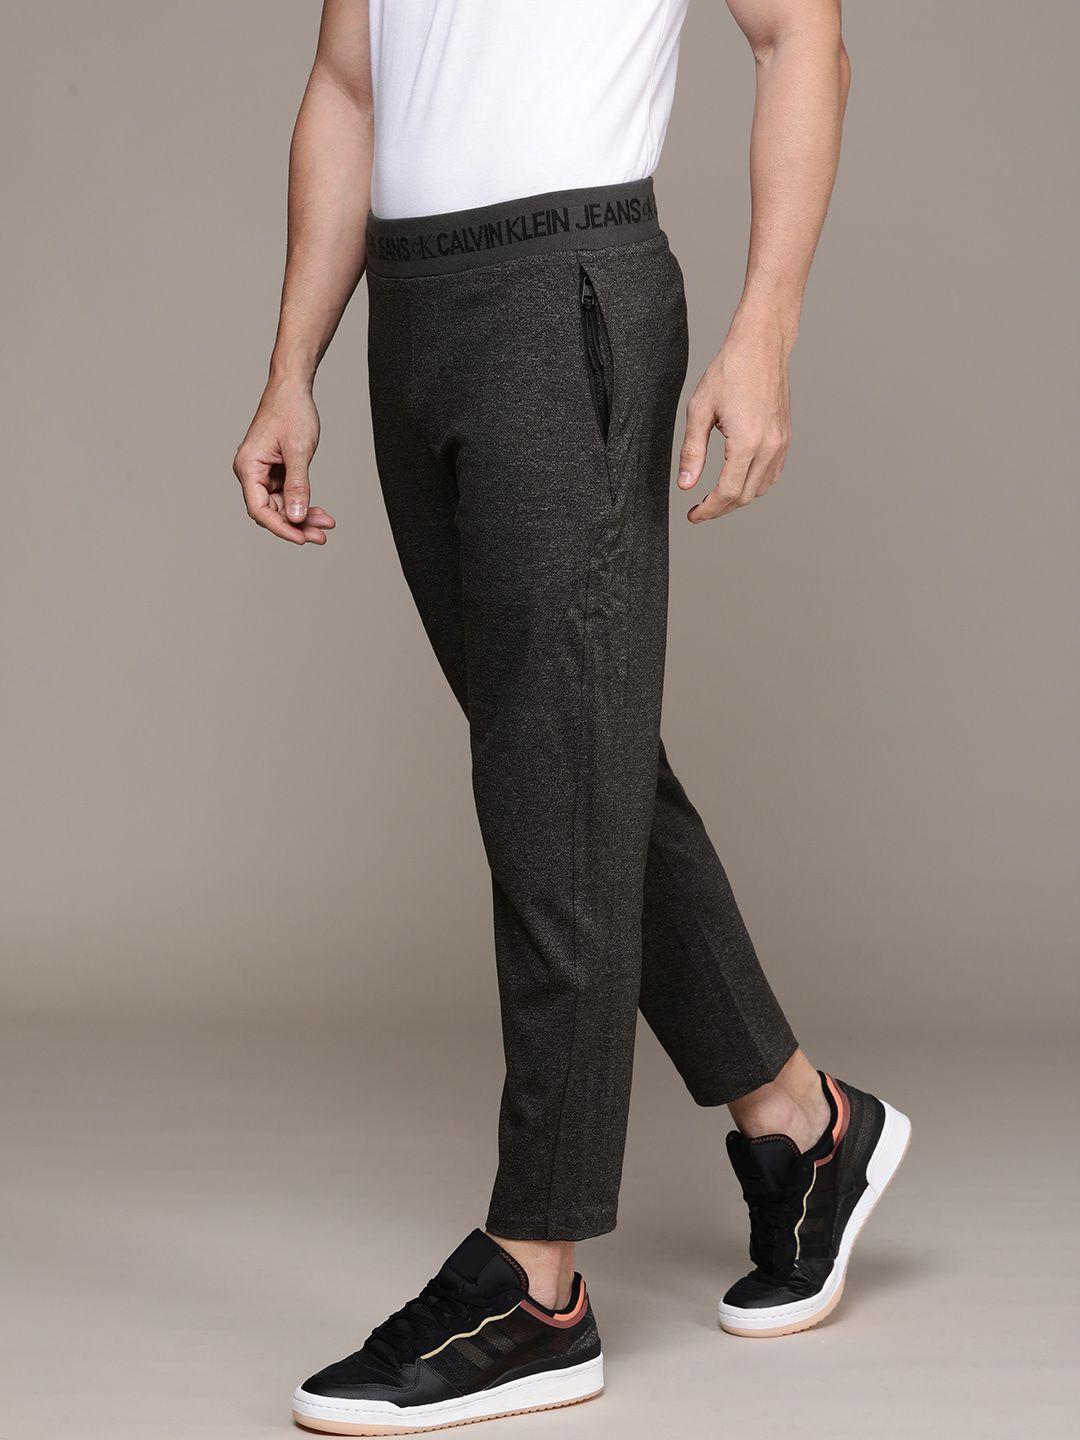 calvin klein jeans men charcoal grey solid track pants